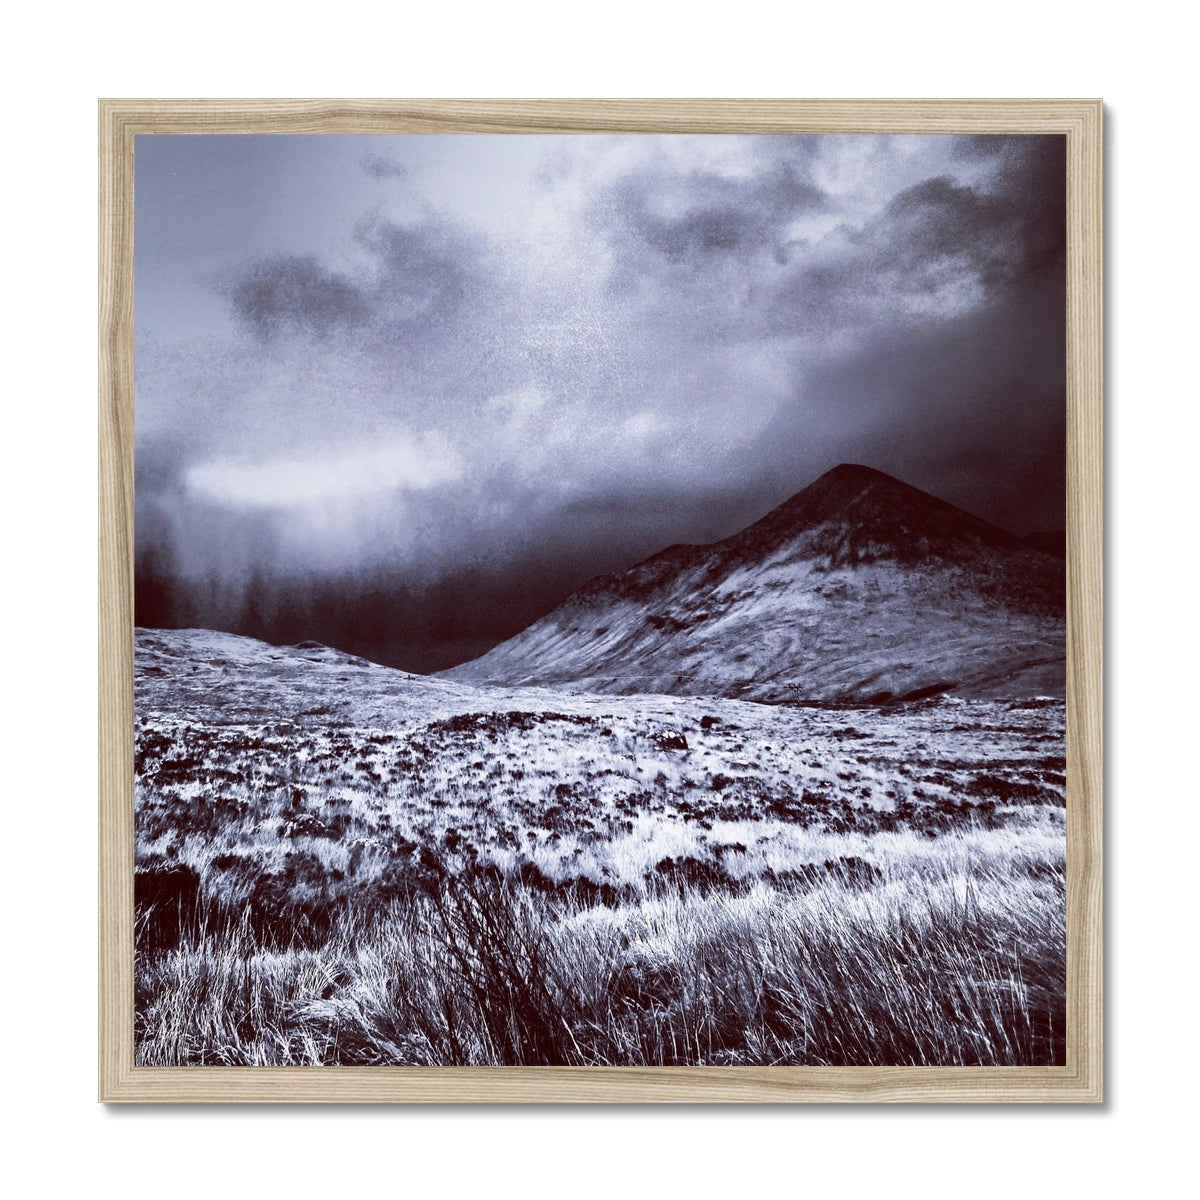 A Brooding Glen Varagil Skye Painting | Framed Prints From Scotland-Framed Prints-Skye Art Gallery-20"x20"-Natural Frame-Paintings, Prints, Homeware, Art Gifts From Scotland By Scottish Artist Kevin Hunter